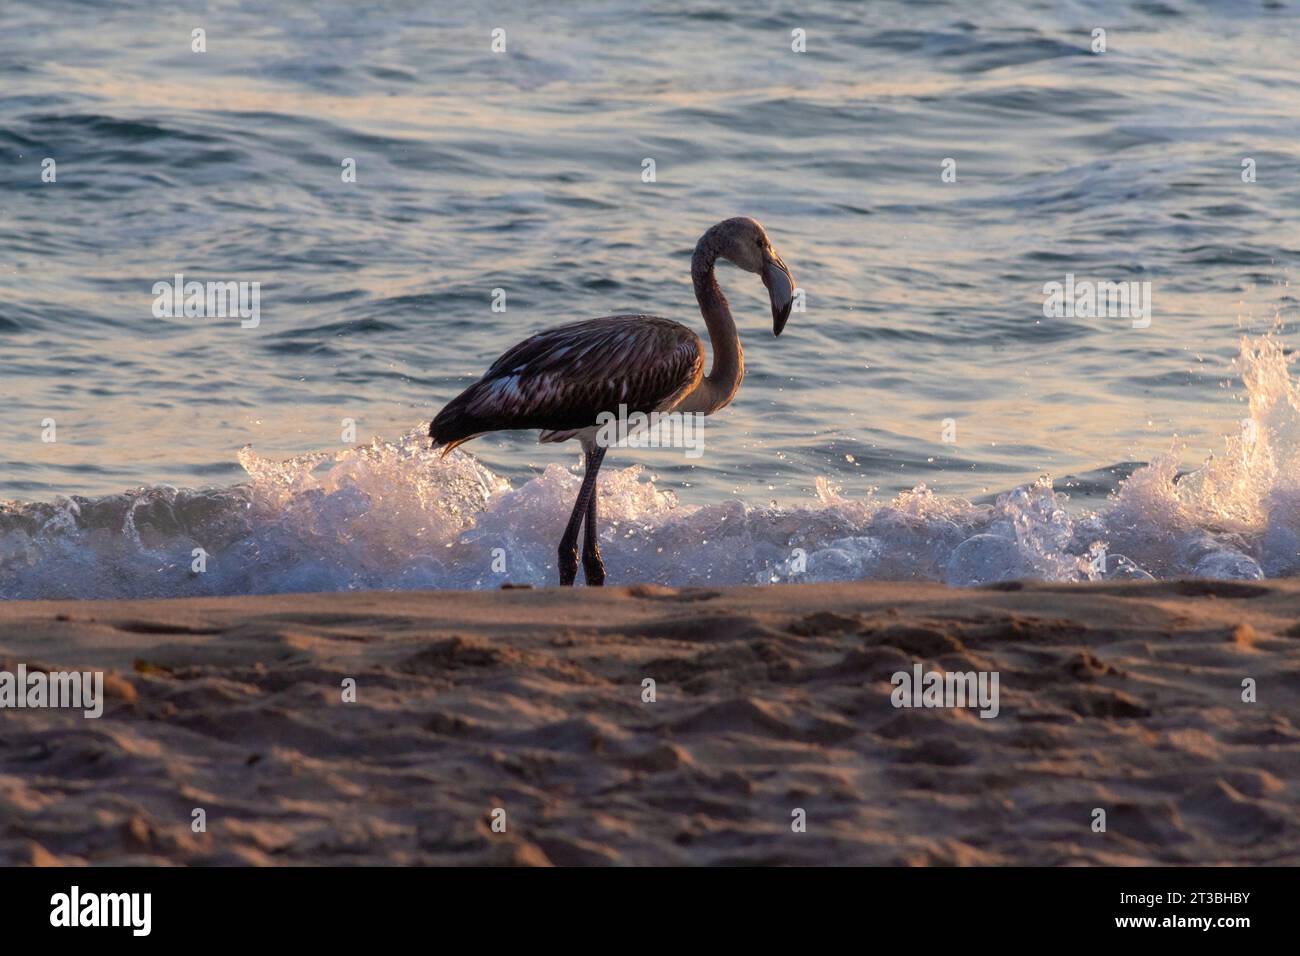 Flamingo against waves on Sicilian beach at sunset light Stock Photo